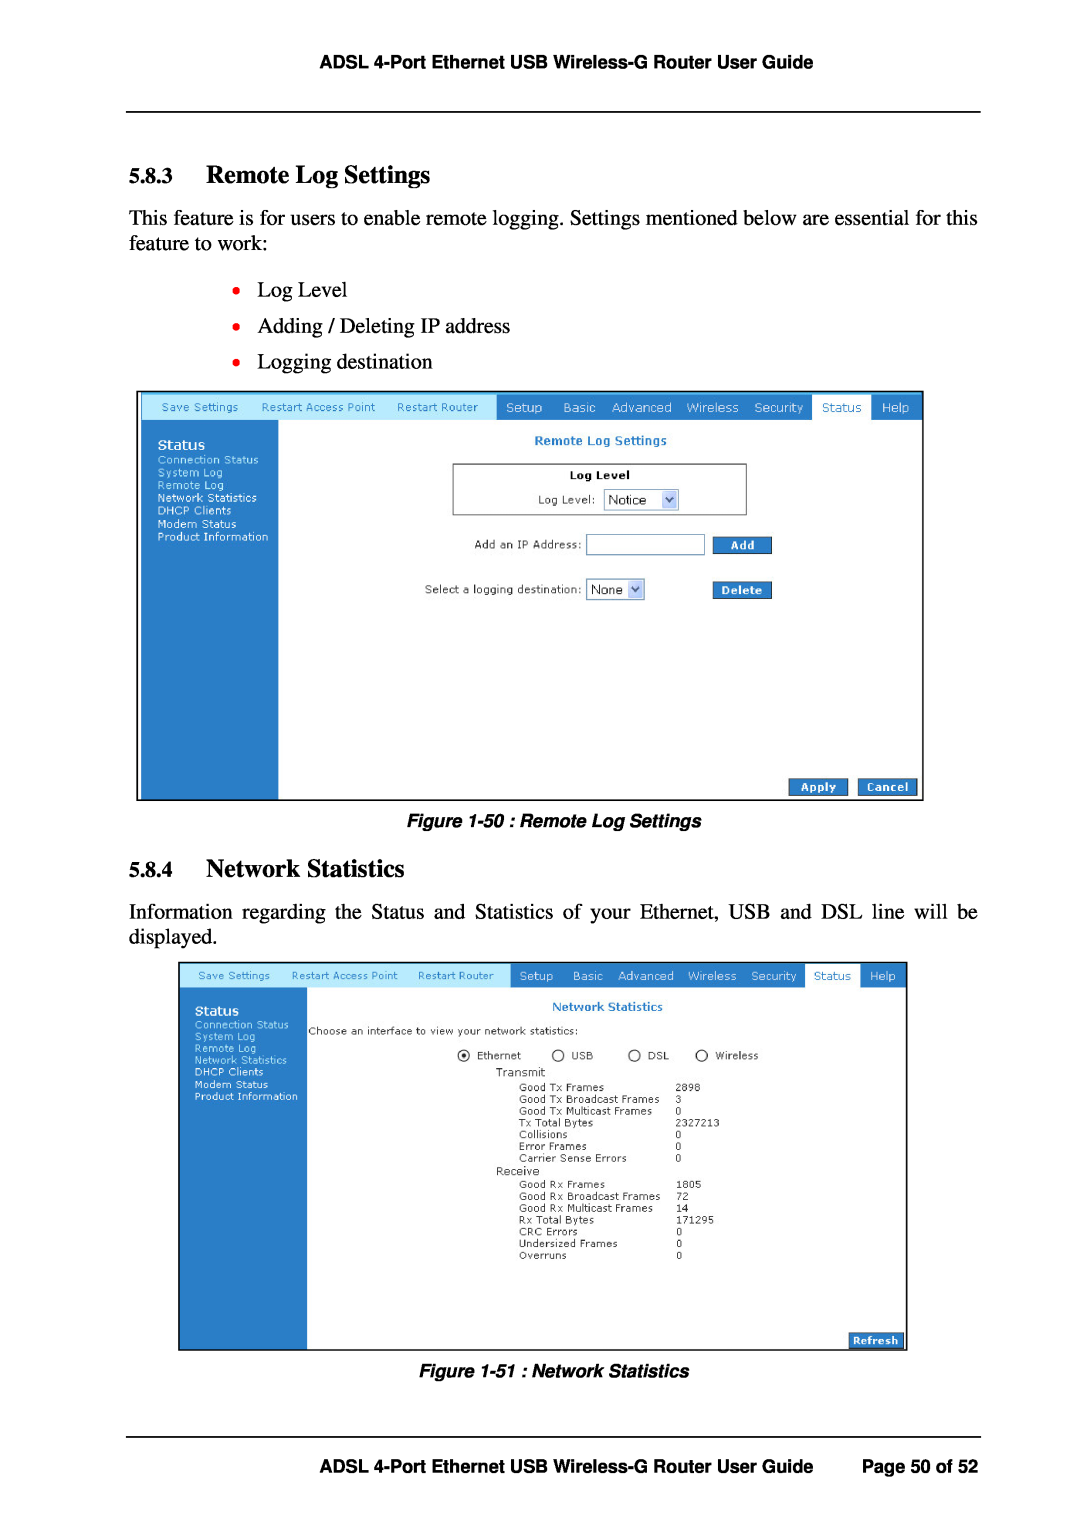 APC ADSL 4-Port manual Remote Log Settings, Network Statistics 